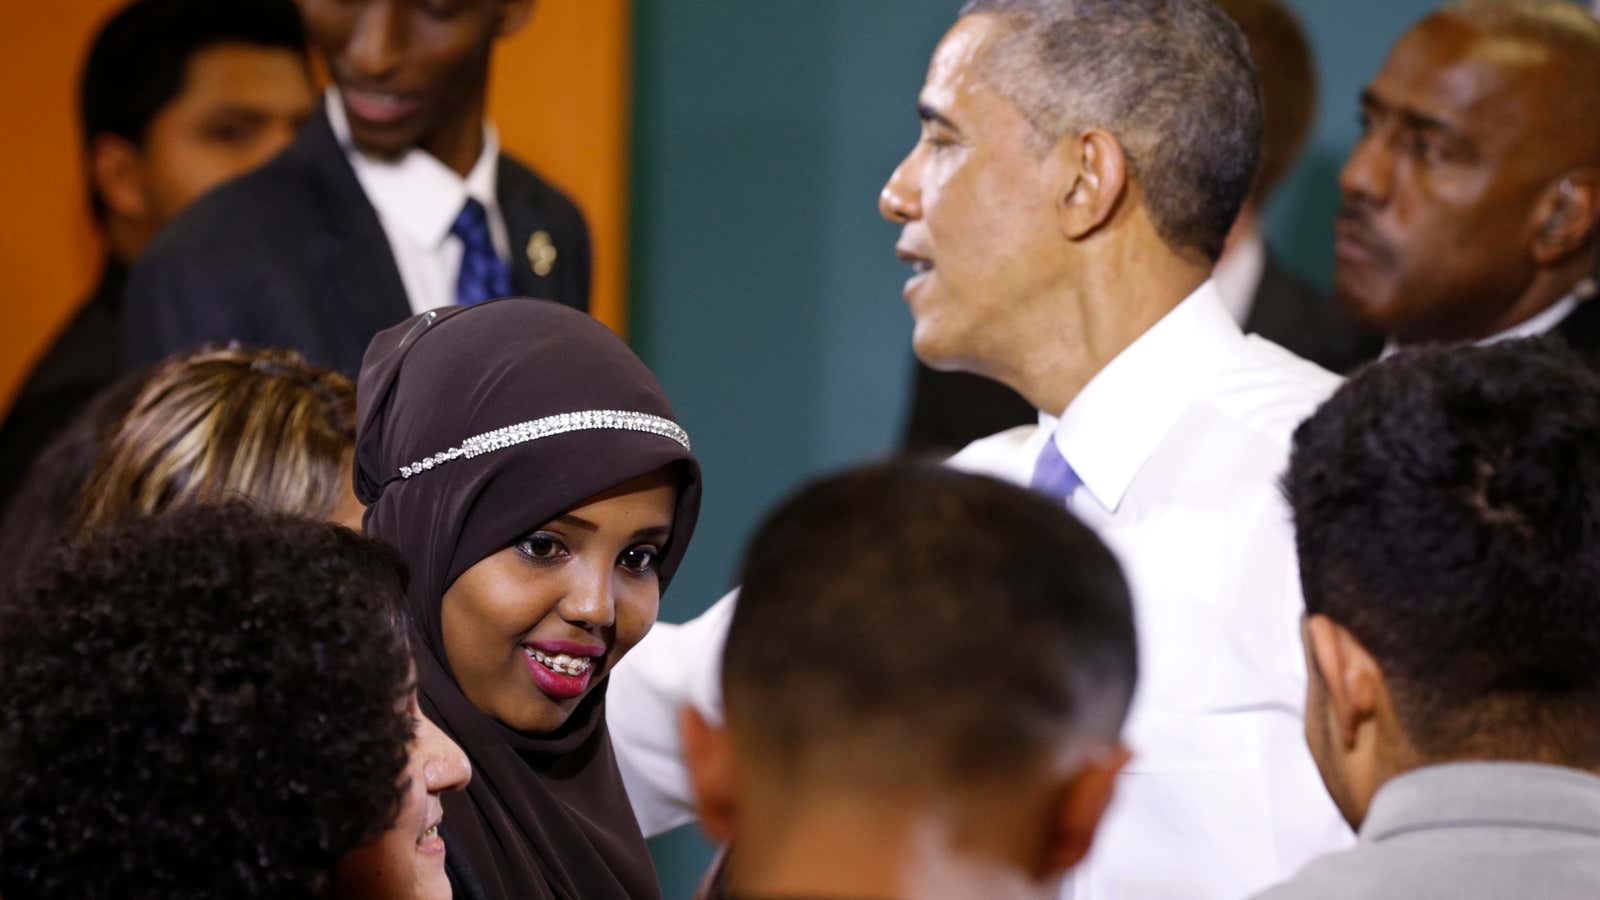 Hibo Omar, 17, a Nashville resident from Somalia, talks to her friends after greeting U.S. President Barack Obama.